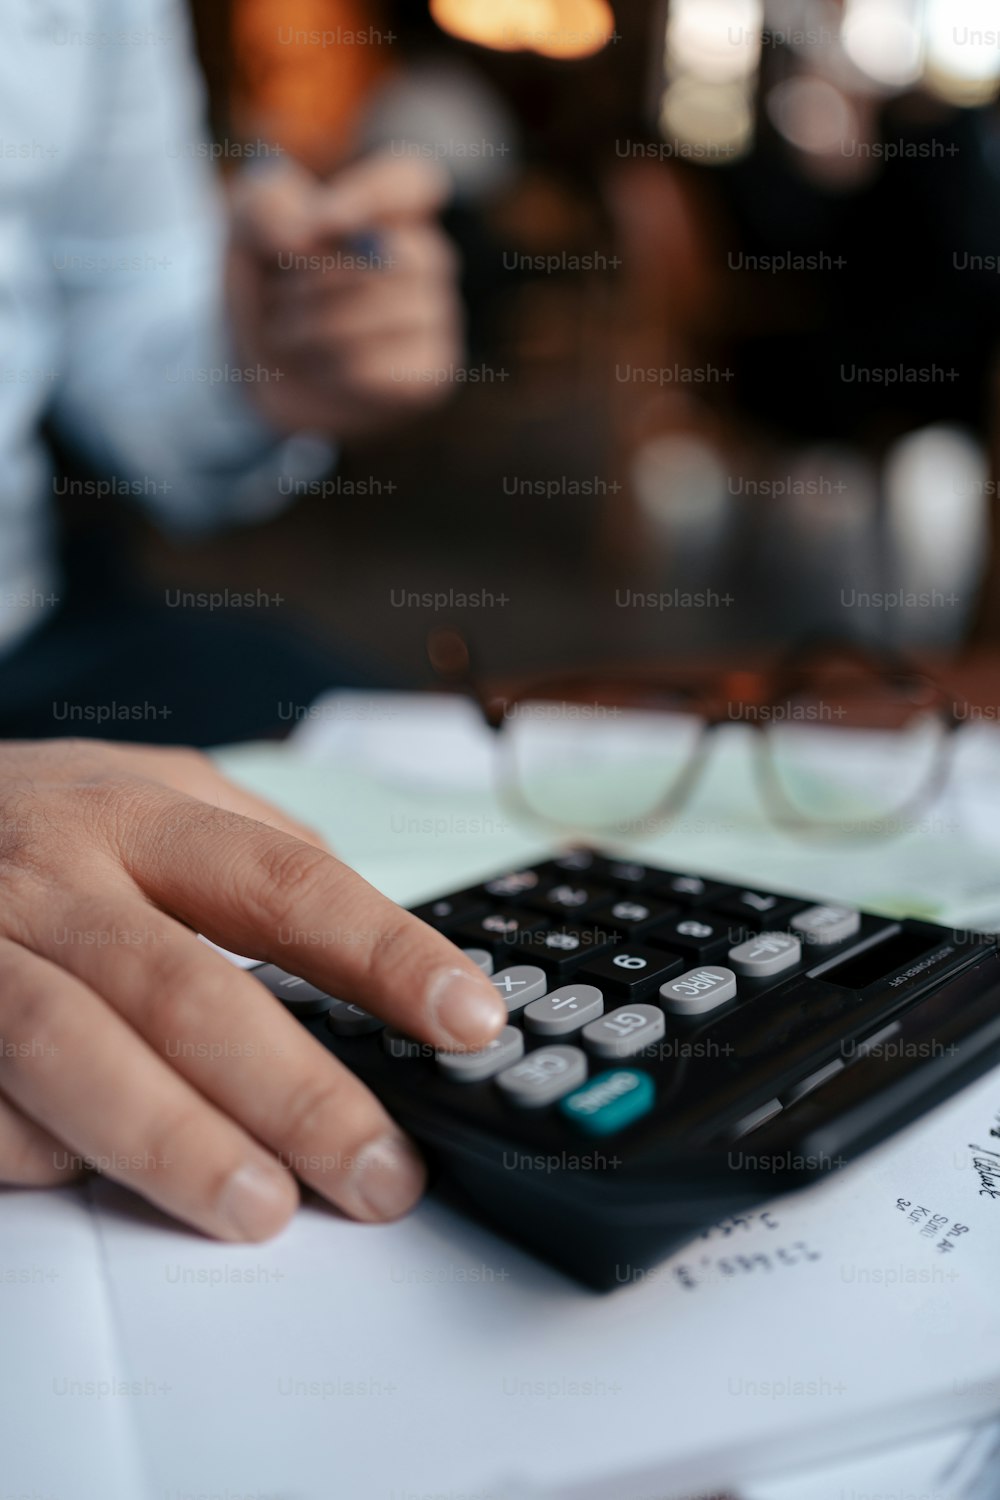 a person using a calculator on a desk